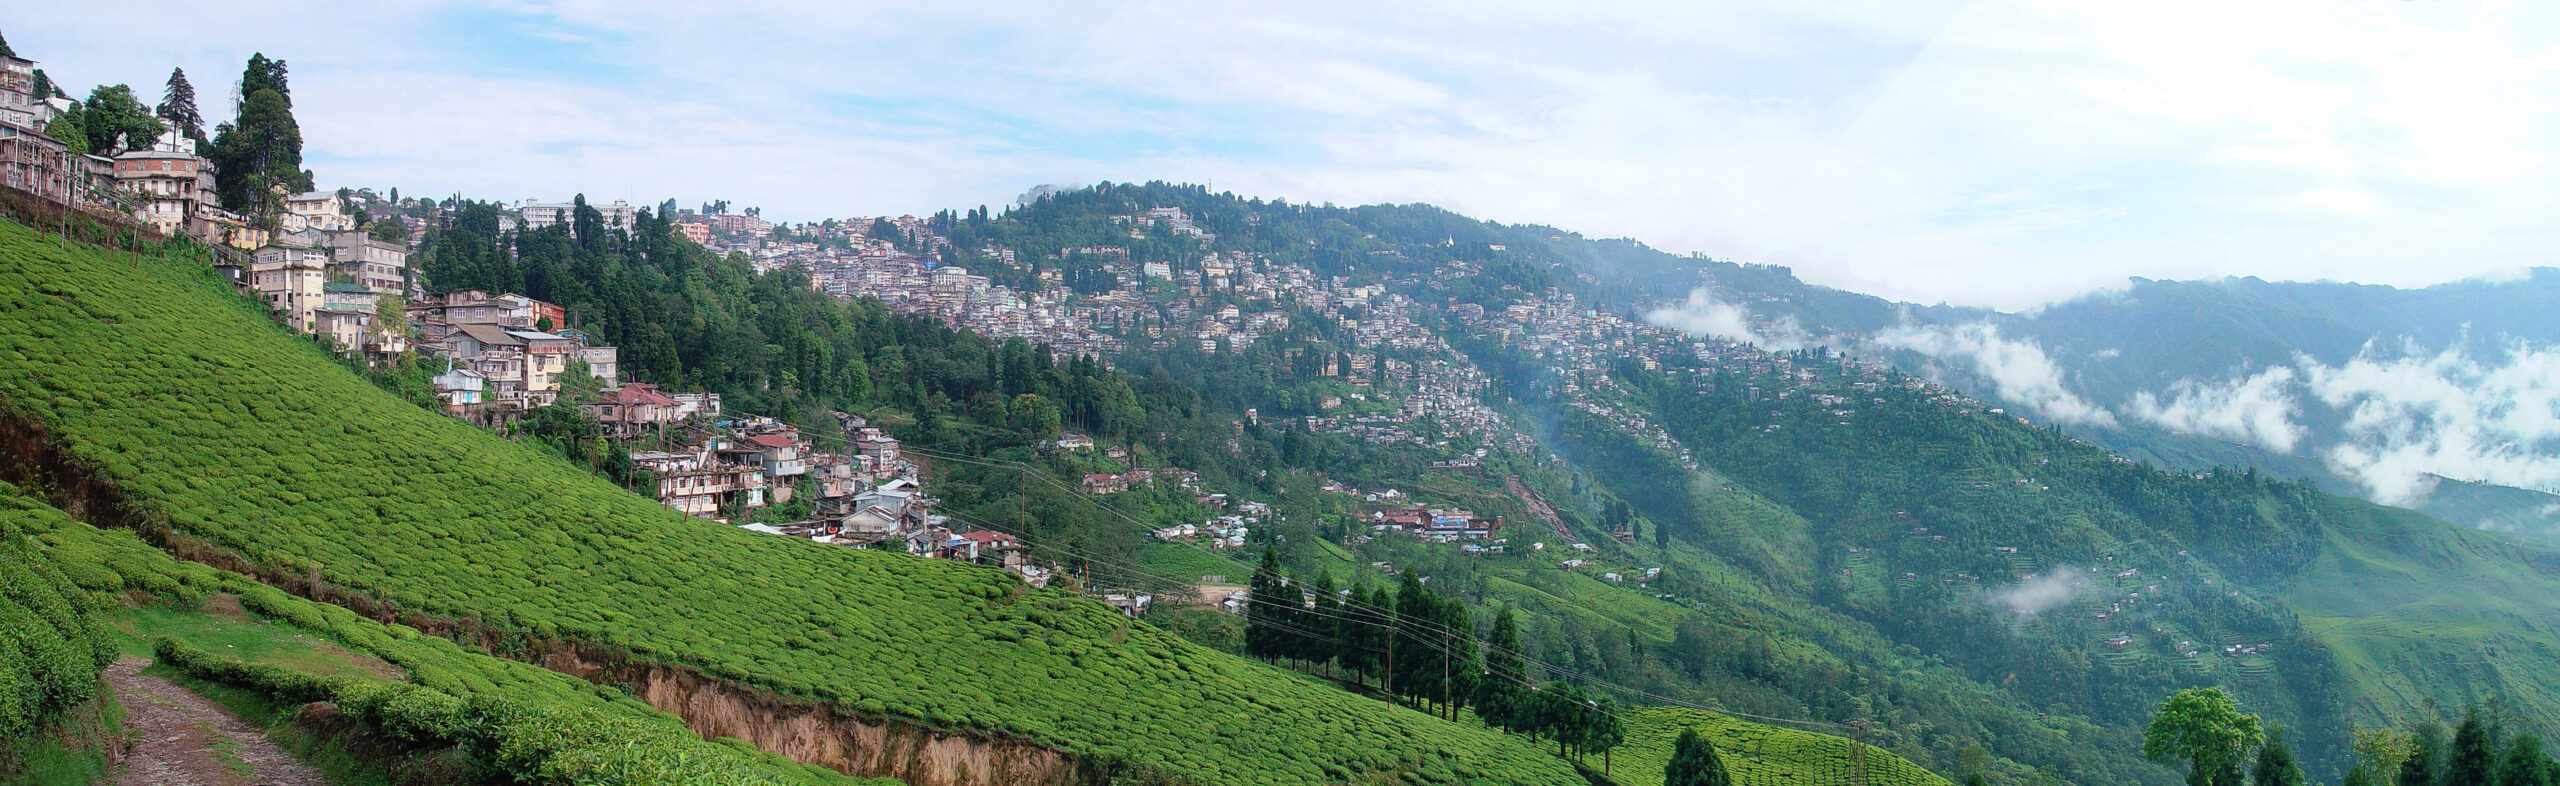 Tourist place in Darjeeling, West Bengal